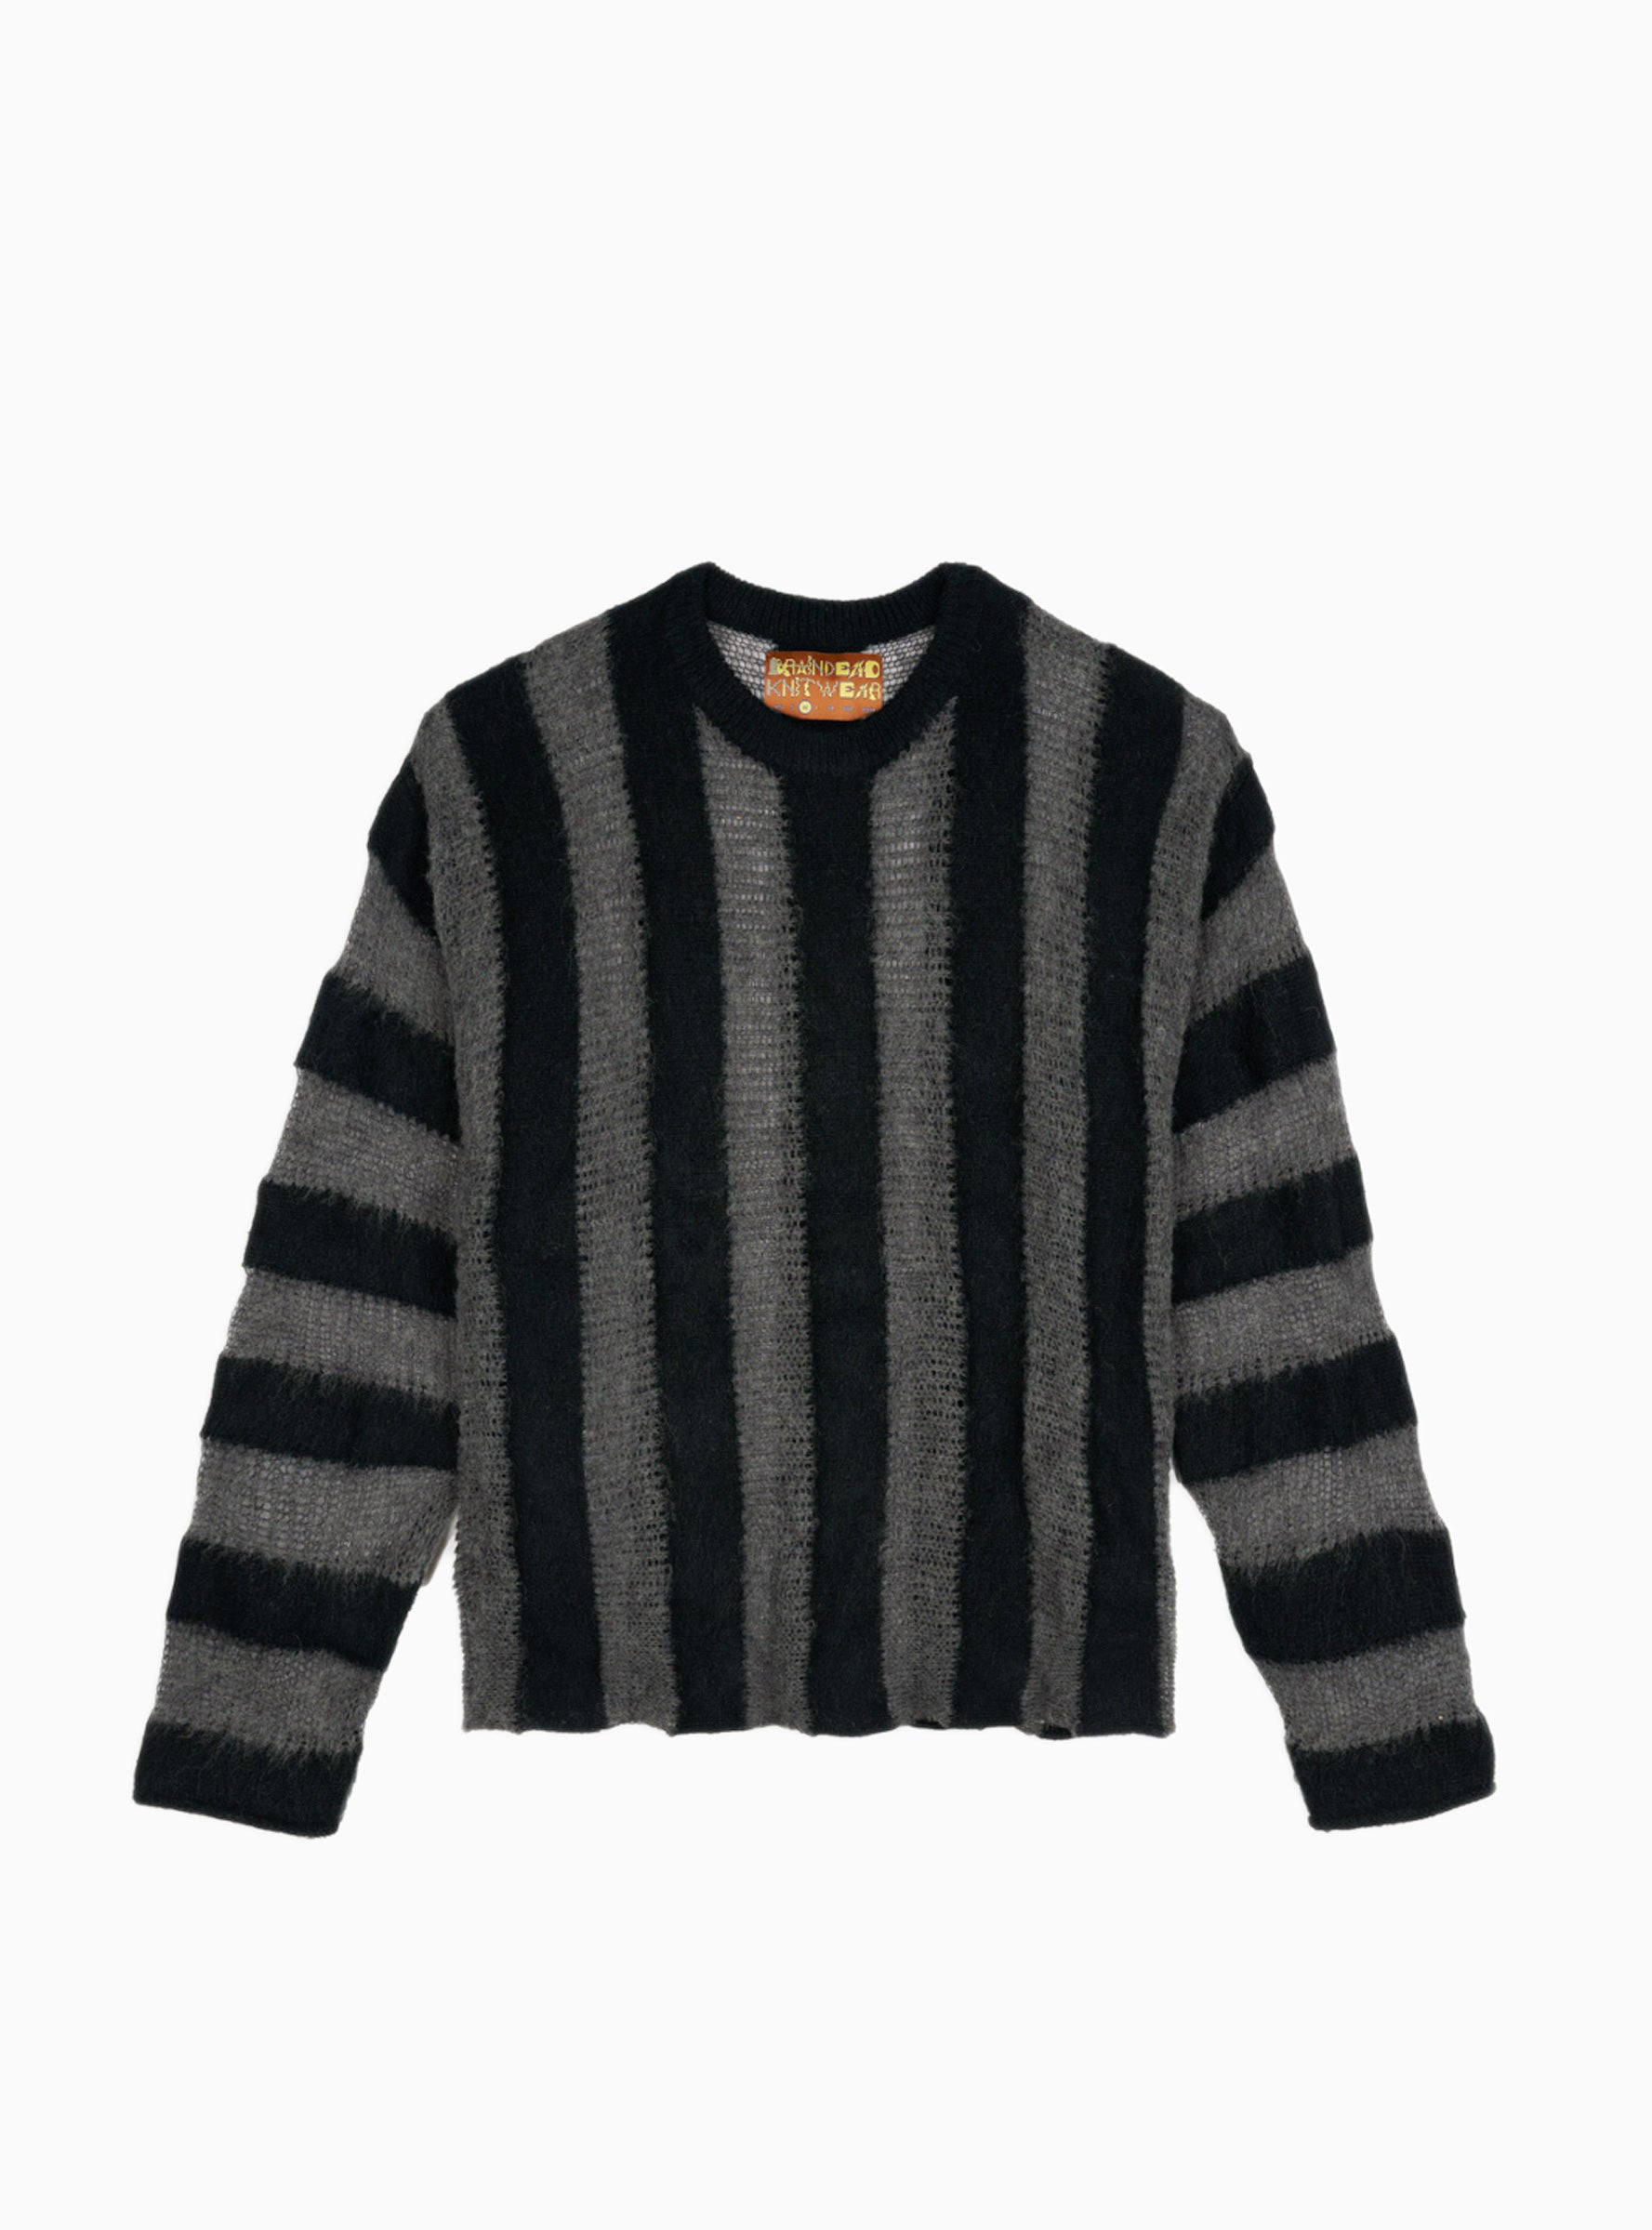 Brain Dead Brain Dead Fuzzy Threadbare Sweater Black Stripe - Size: Medium